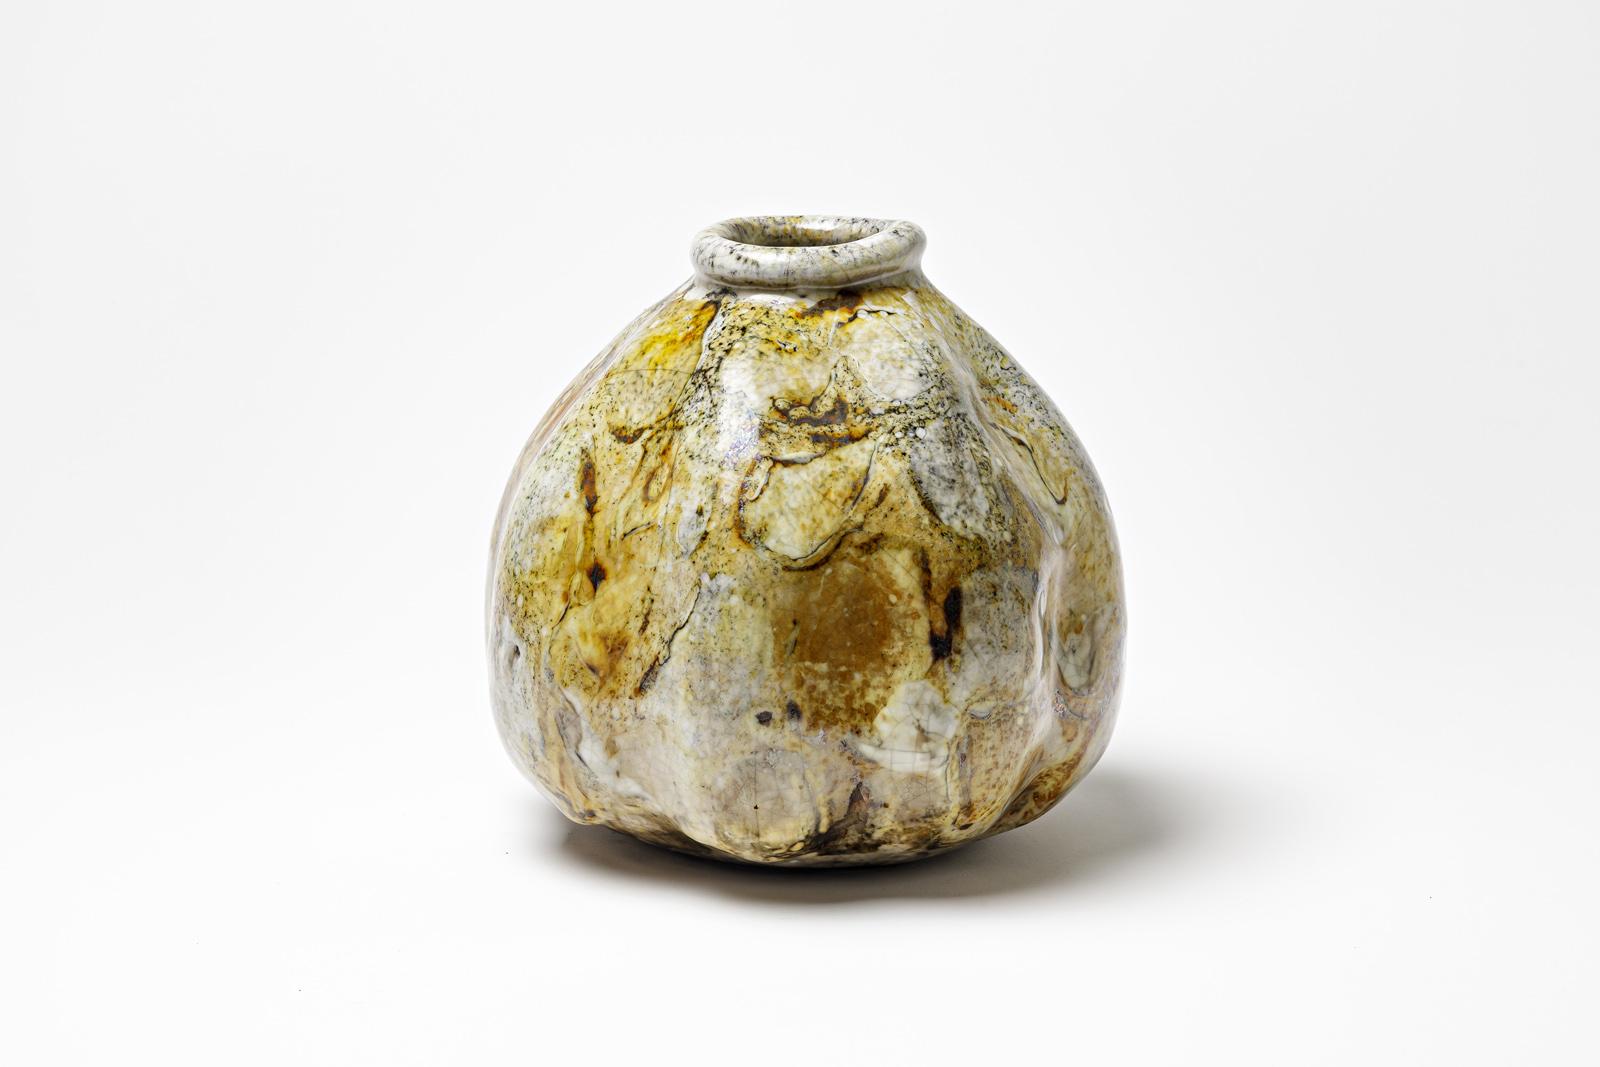 Yellow/brown and white glazed ceramic vase by Gisèle Buthod Garçon. 
Raku fired. Artist monogram under the base. Circa 1980-1990.
H : 8.3’ x 7.1’ inches.